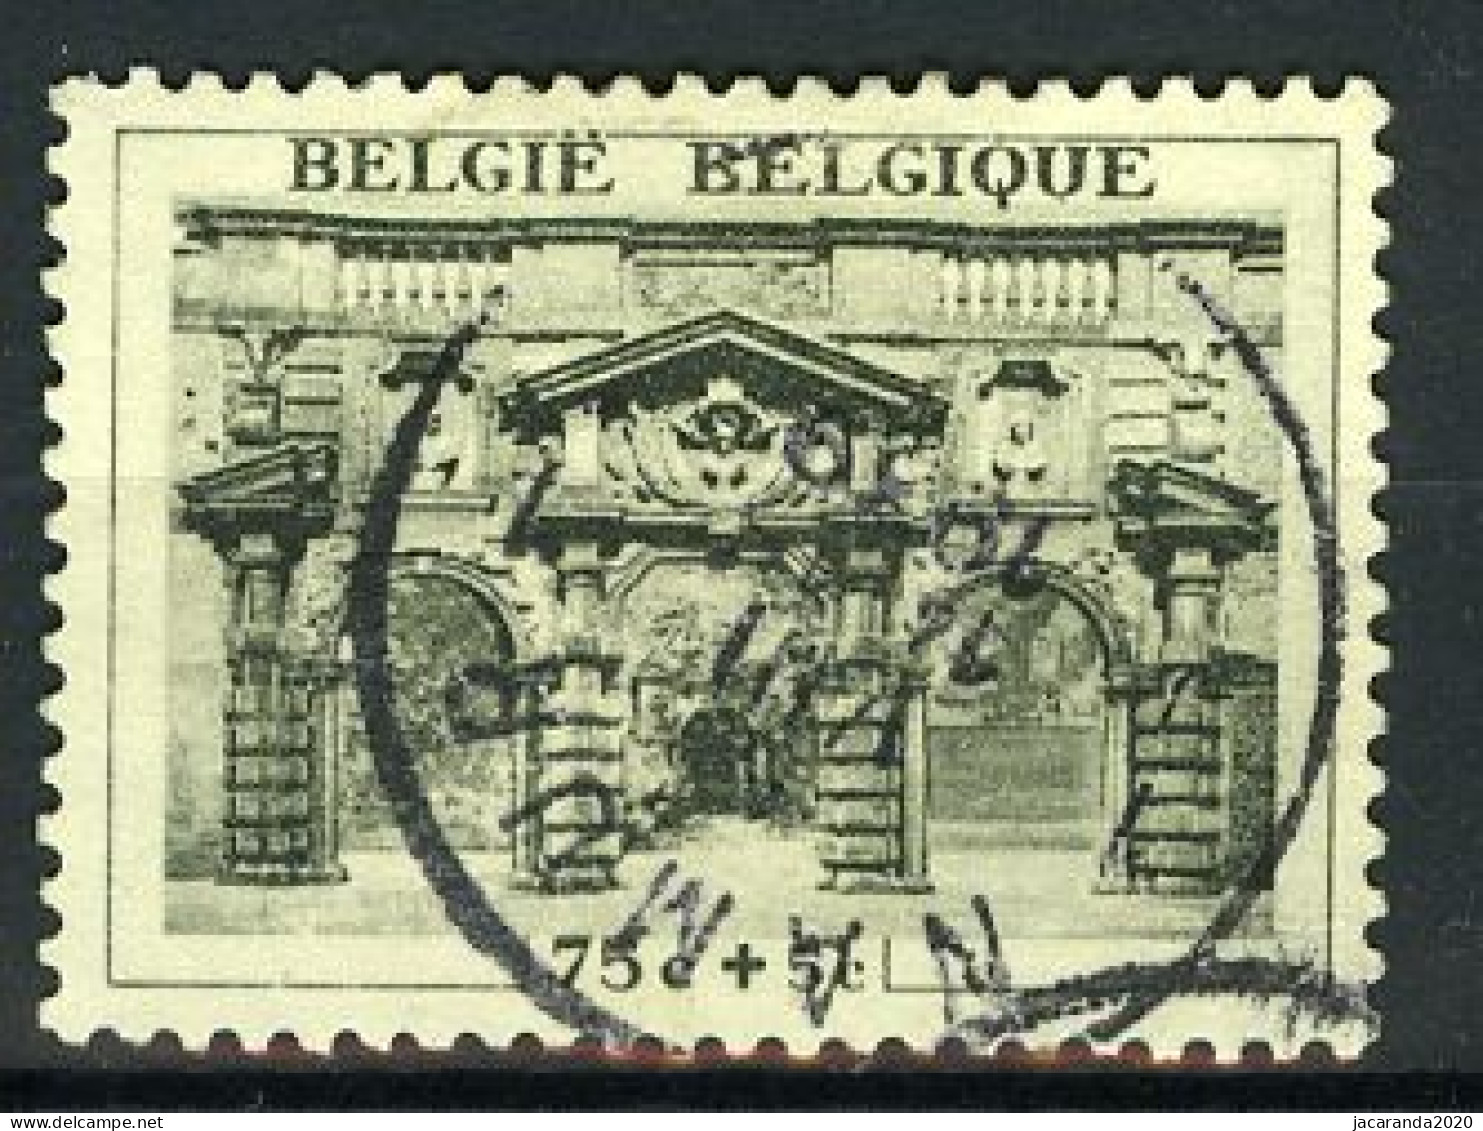 België 506 - Rubenshuis - Antwerpen - Paviljoen Van Hercules - Gestempeld - Oblitéré - Used - Usati